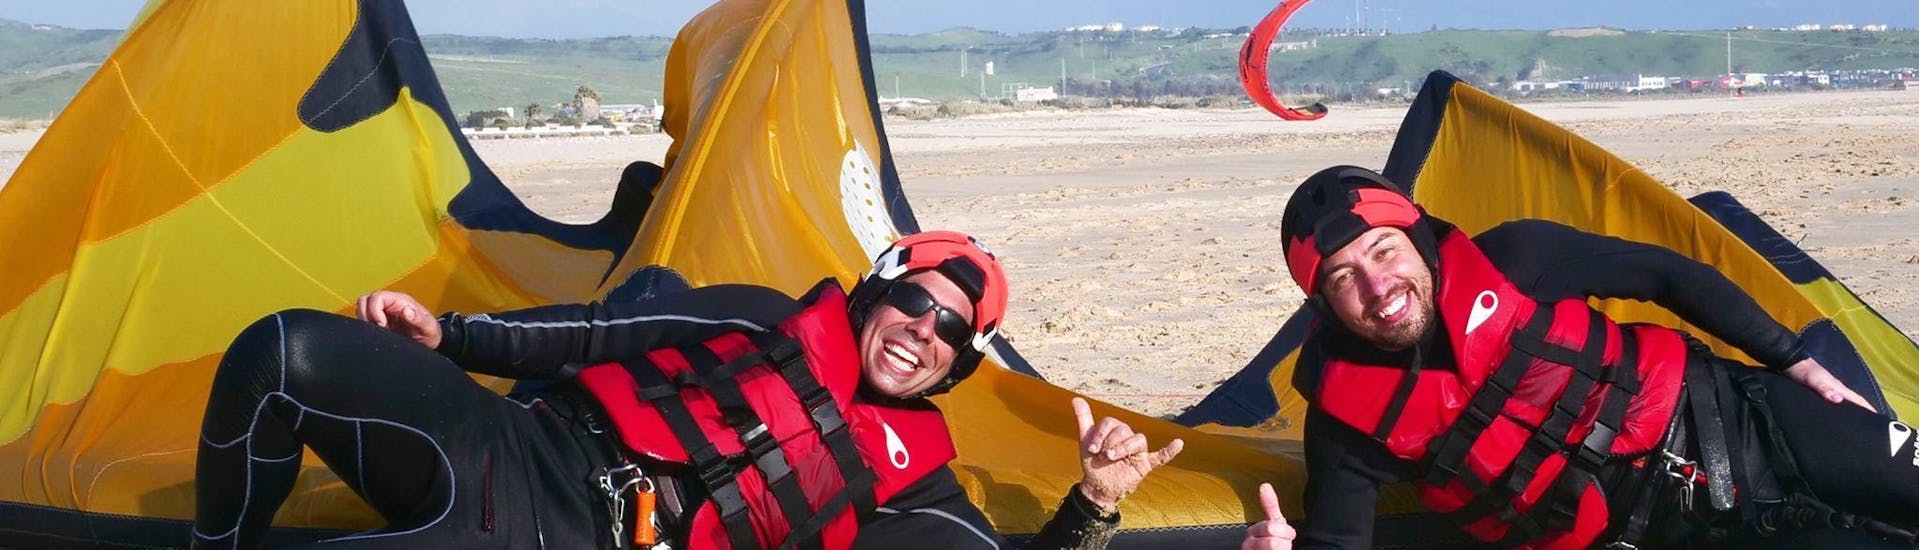 Lezioni private di kitesurf a Tarifa da 14 anni.